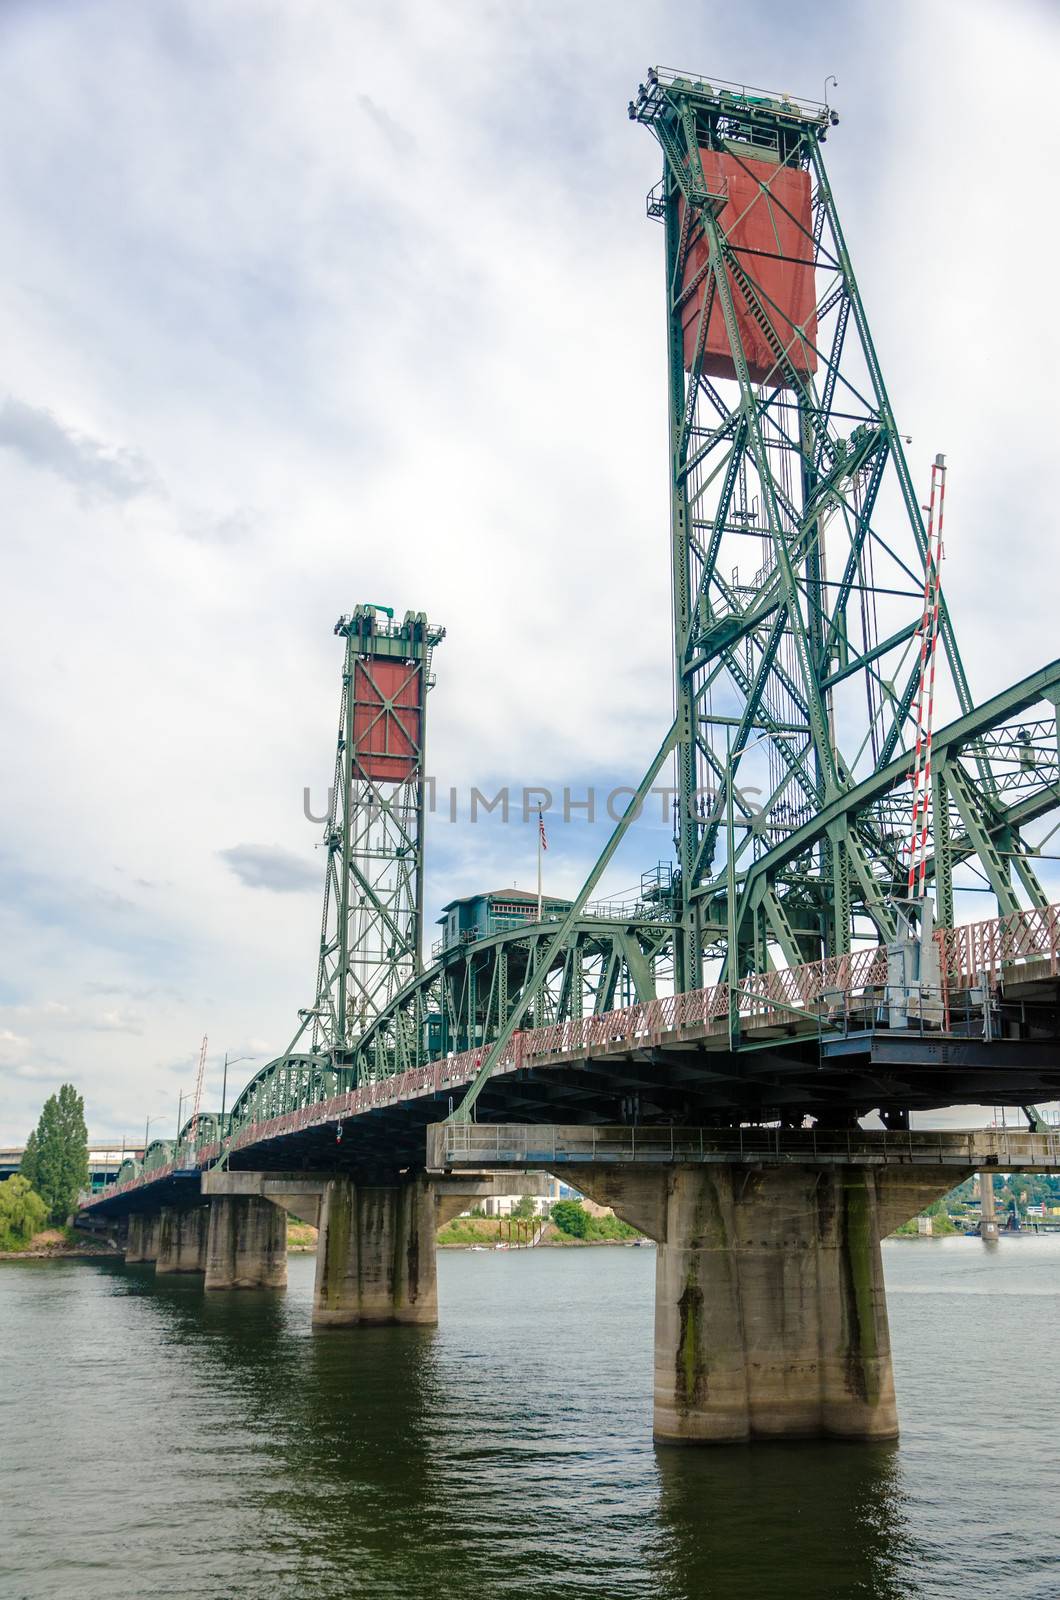 View of the Hawthorne Bridge crossing the Willamette River in Portland, Oregon